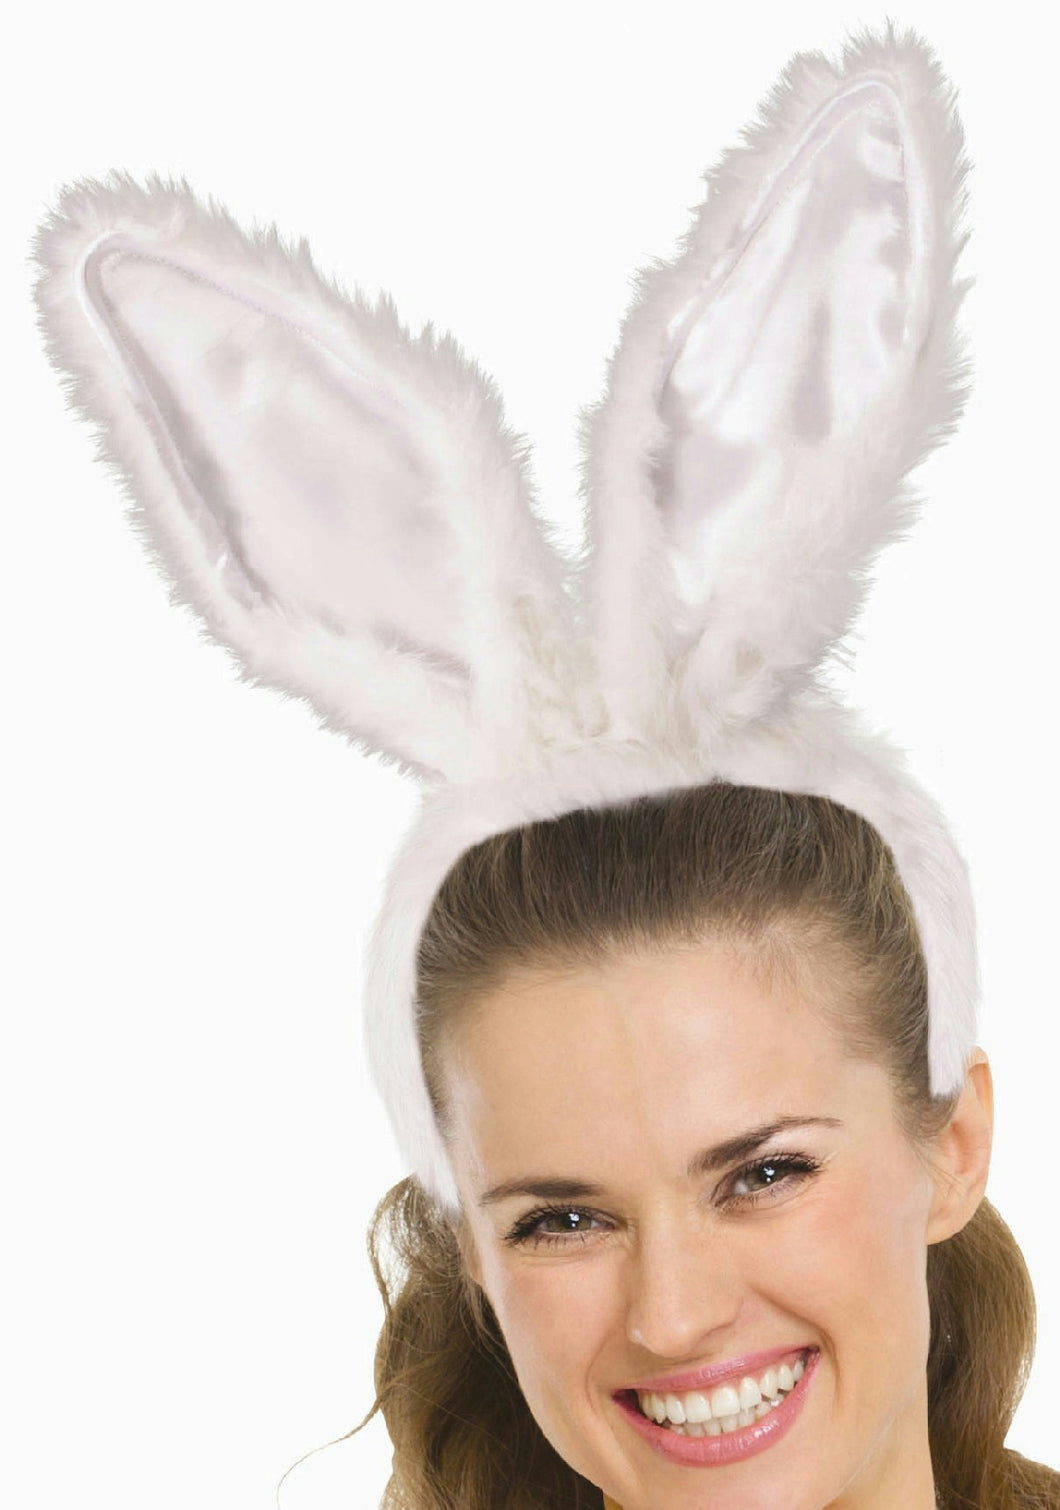 Super Deluxe Bunny Rabbit Ears on Headband